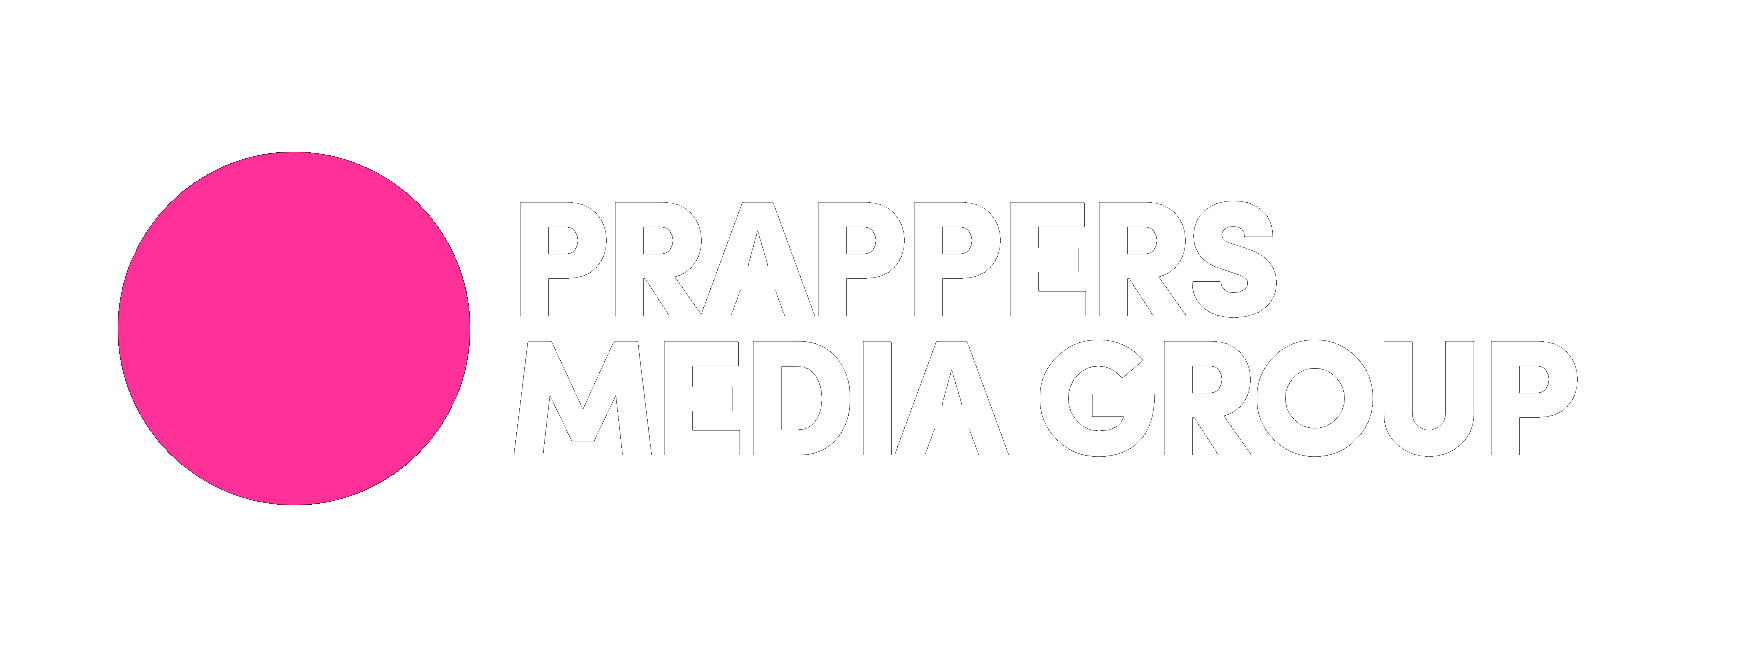 PRAPPERS MEDIA GROUP